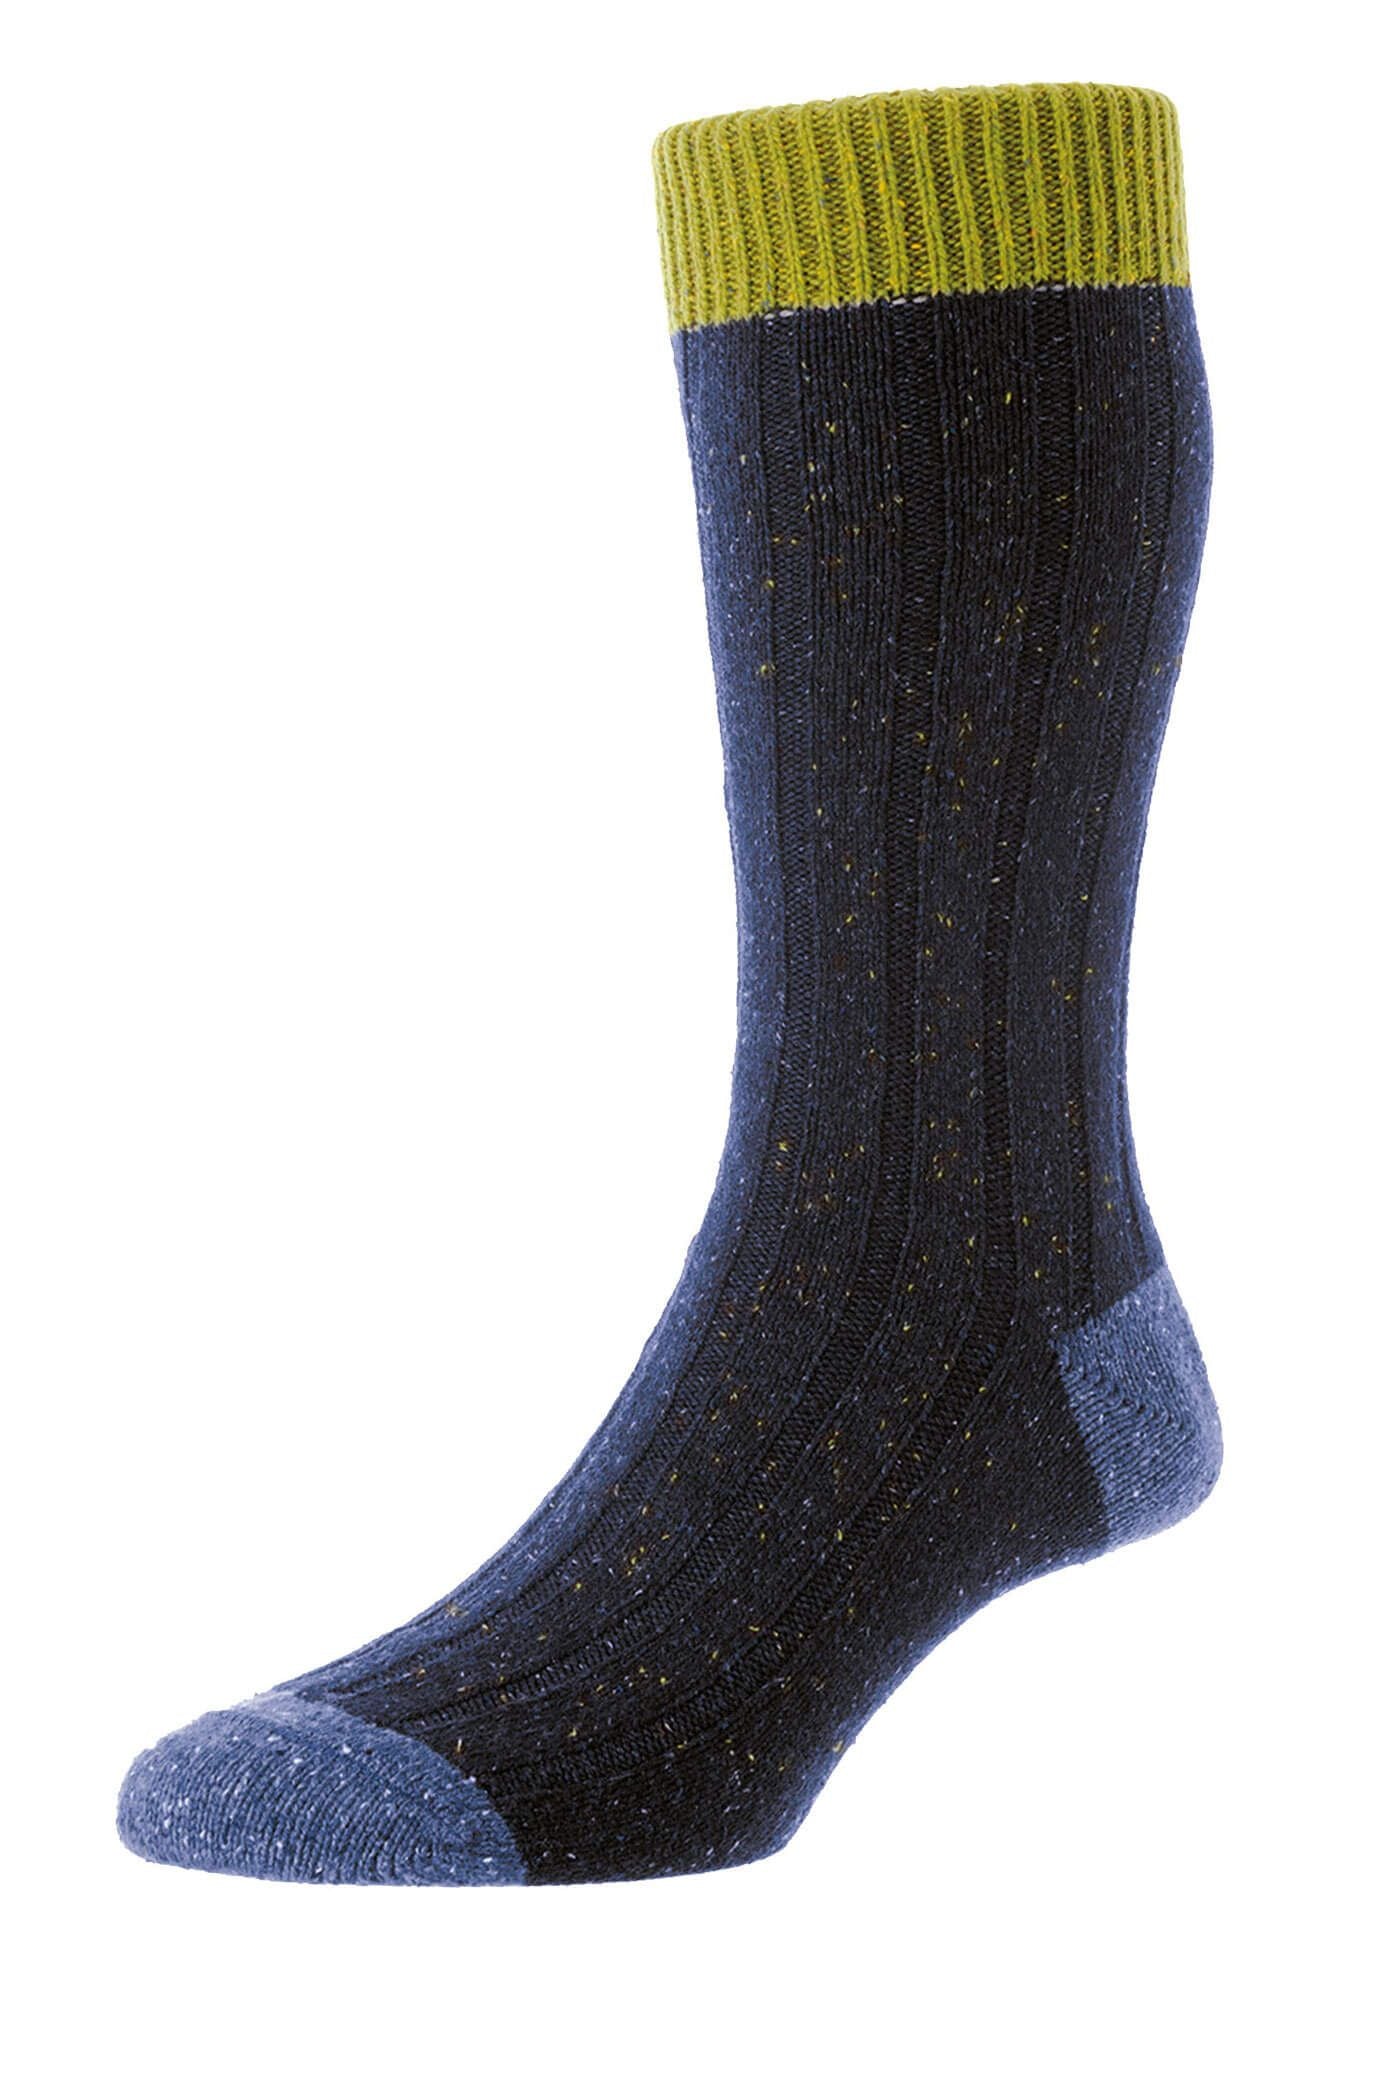 Thornham Wool Socks